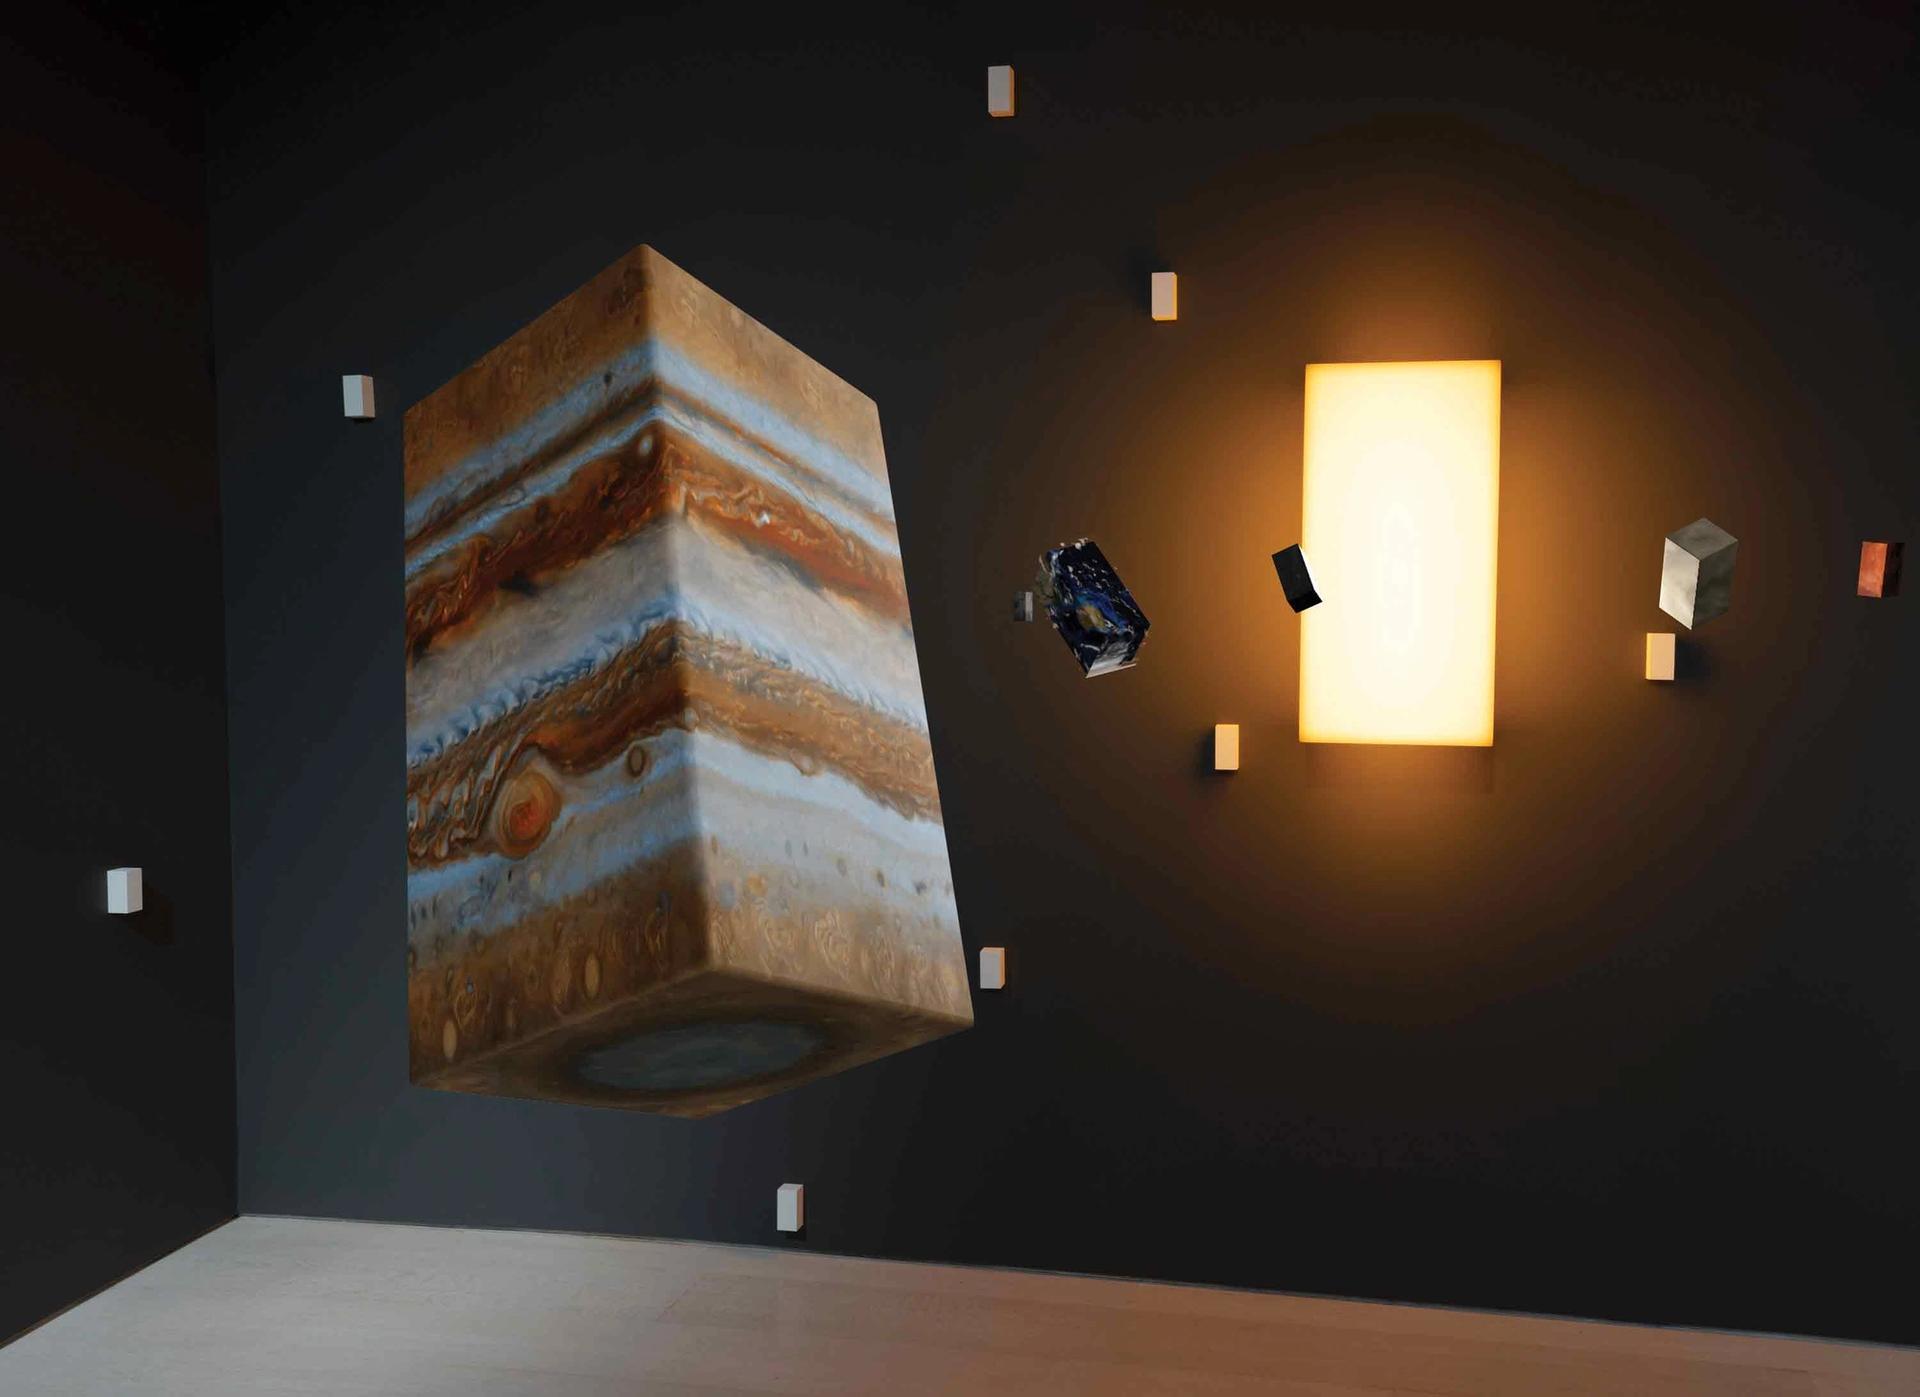 Block Universe (2021) was created by the  Studio DRIFT artists Lonneke Gordijn and Ralph Nauta Courtesy Art Basel